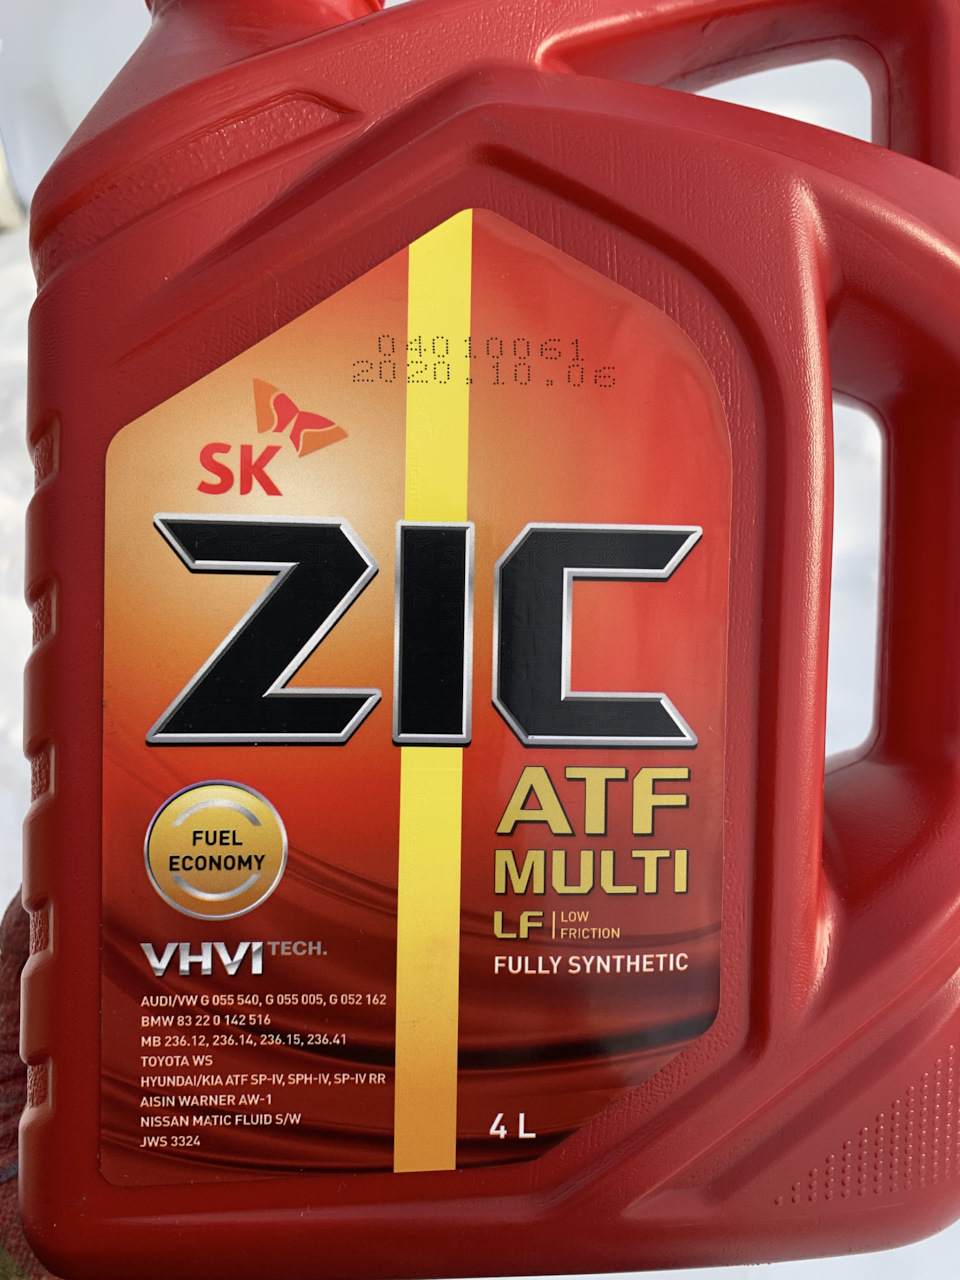 Zic atf multi купить. ZIC ATF Multi LF. ZIC ATF Multi Мазда 3. Масло транс.синт. ZIC ATF Multi LF 4l.. Масло ZIC Multi LF для АКПП.